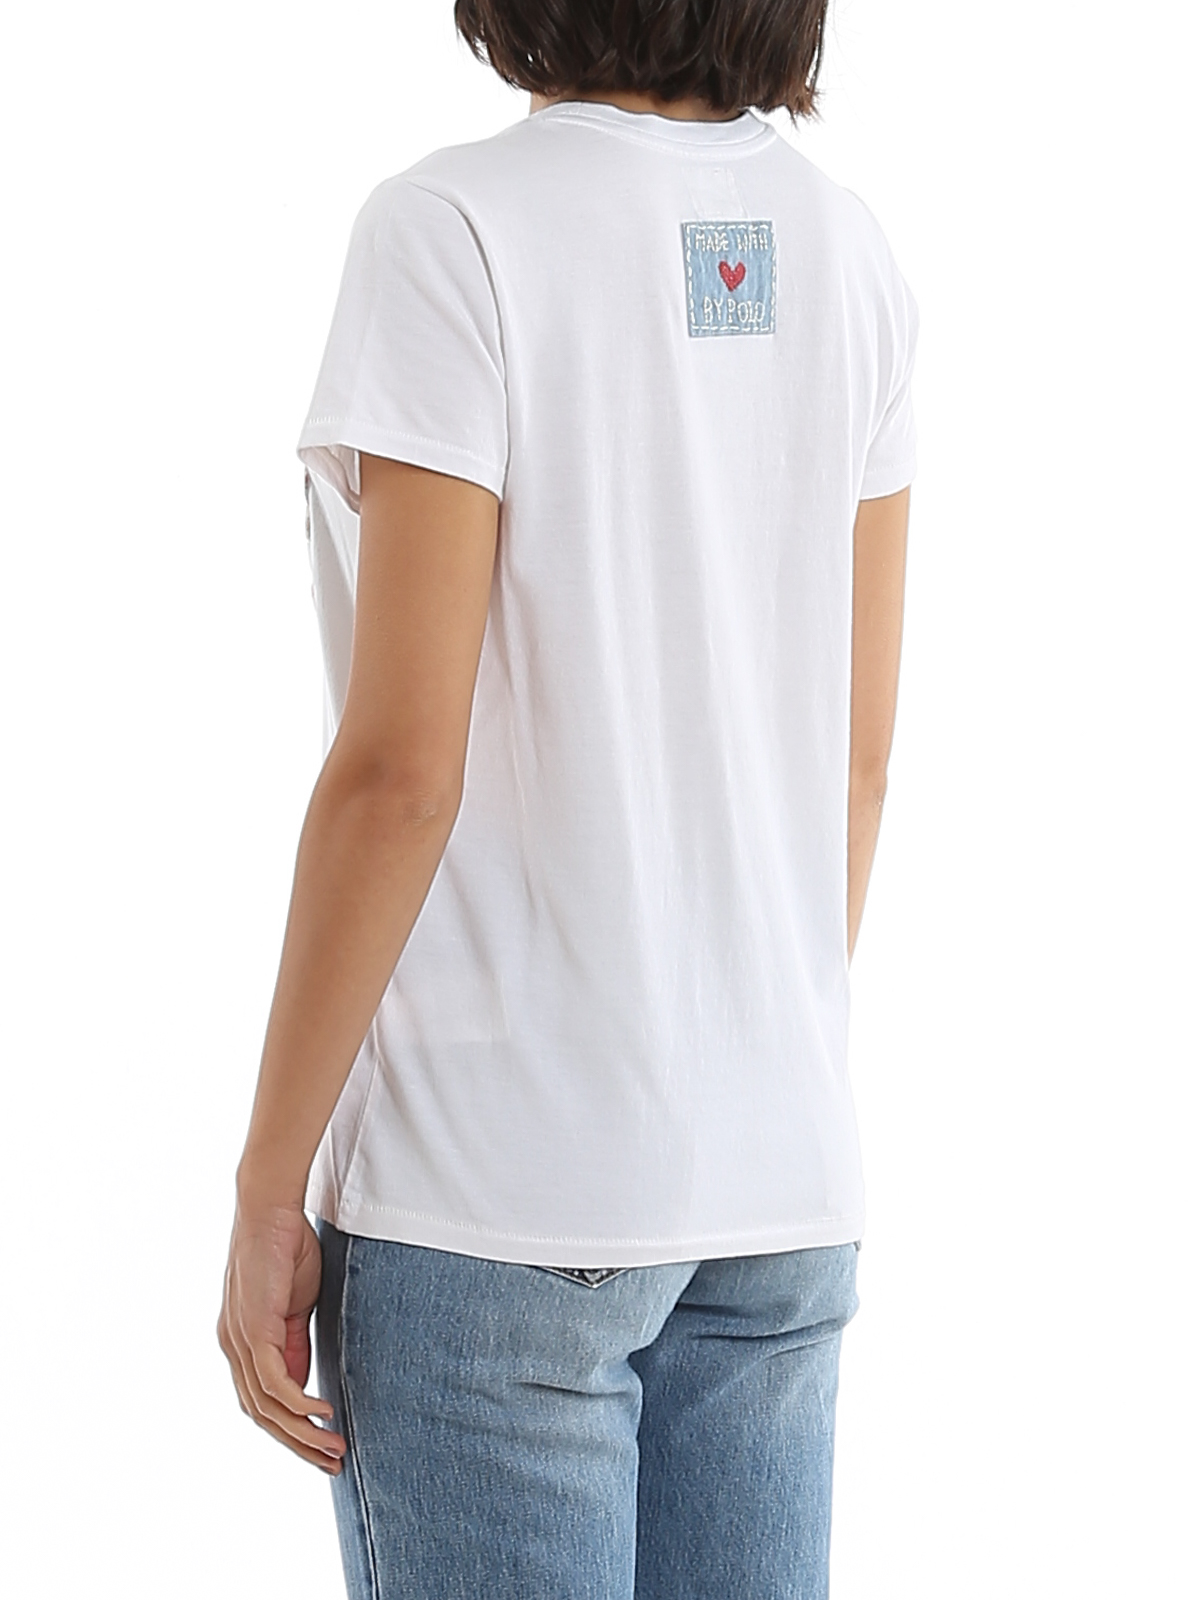 Tシャツ Polo Ralph Lauren - Tシャツ - 白 - 211792192001 | iKRIX.com